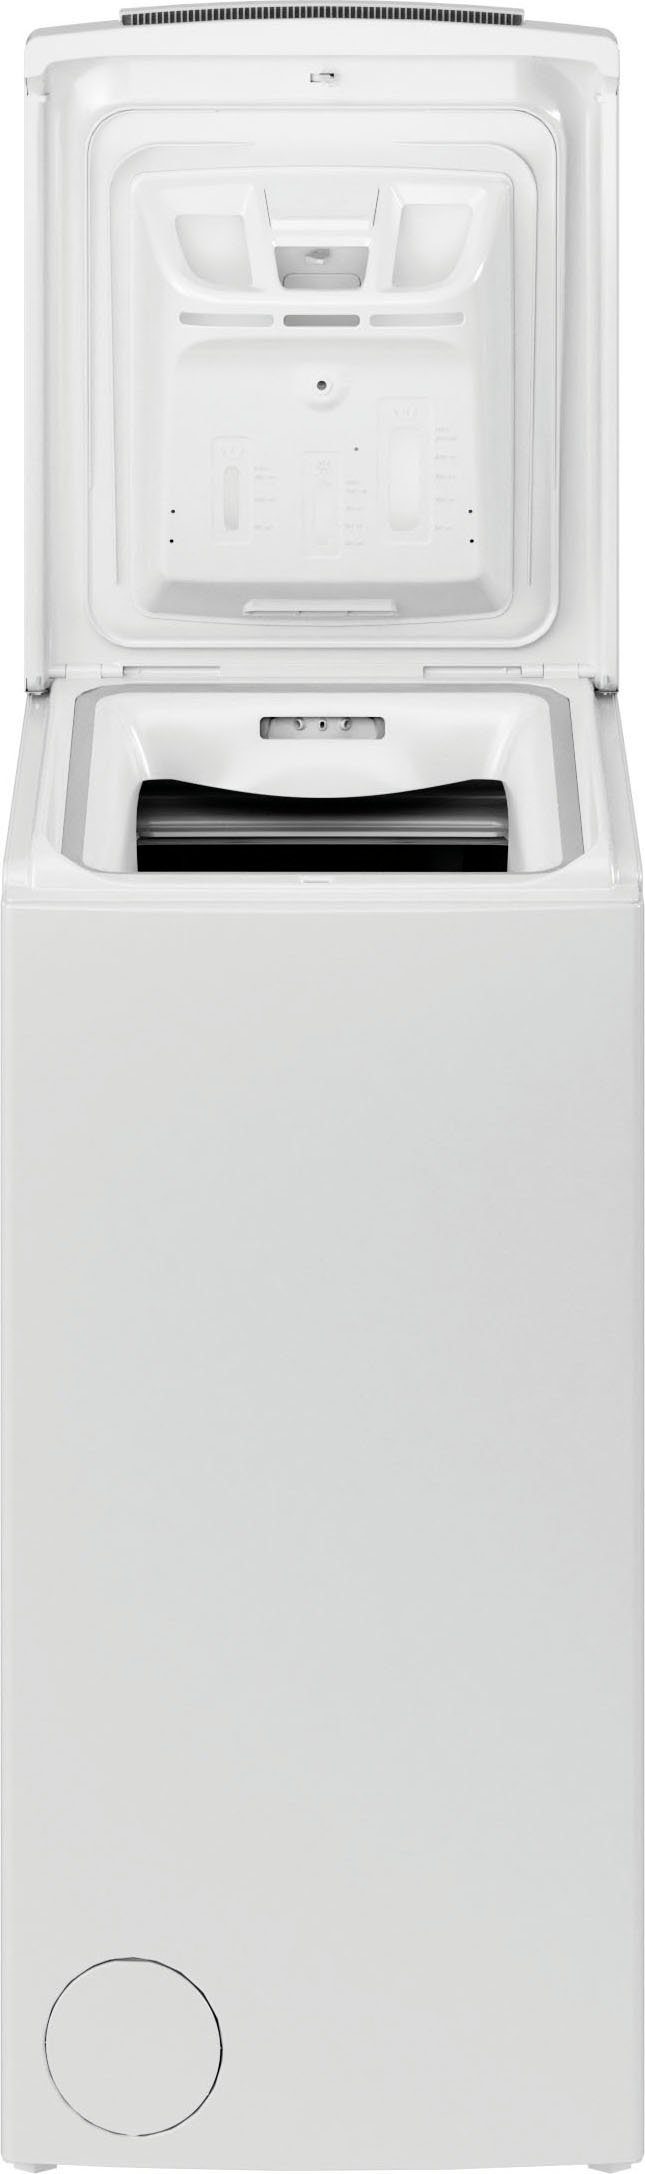 BAUKNECHT Waschmaschine Toplader Smart U/min Eco 12C, 1200 6 kg, WAT